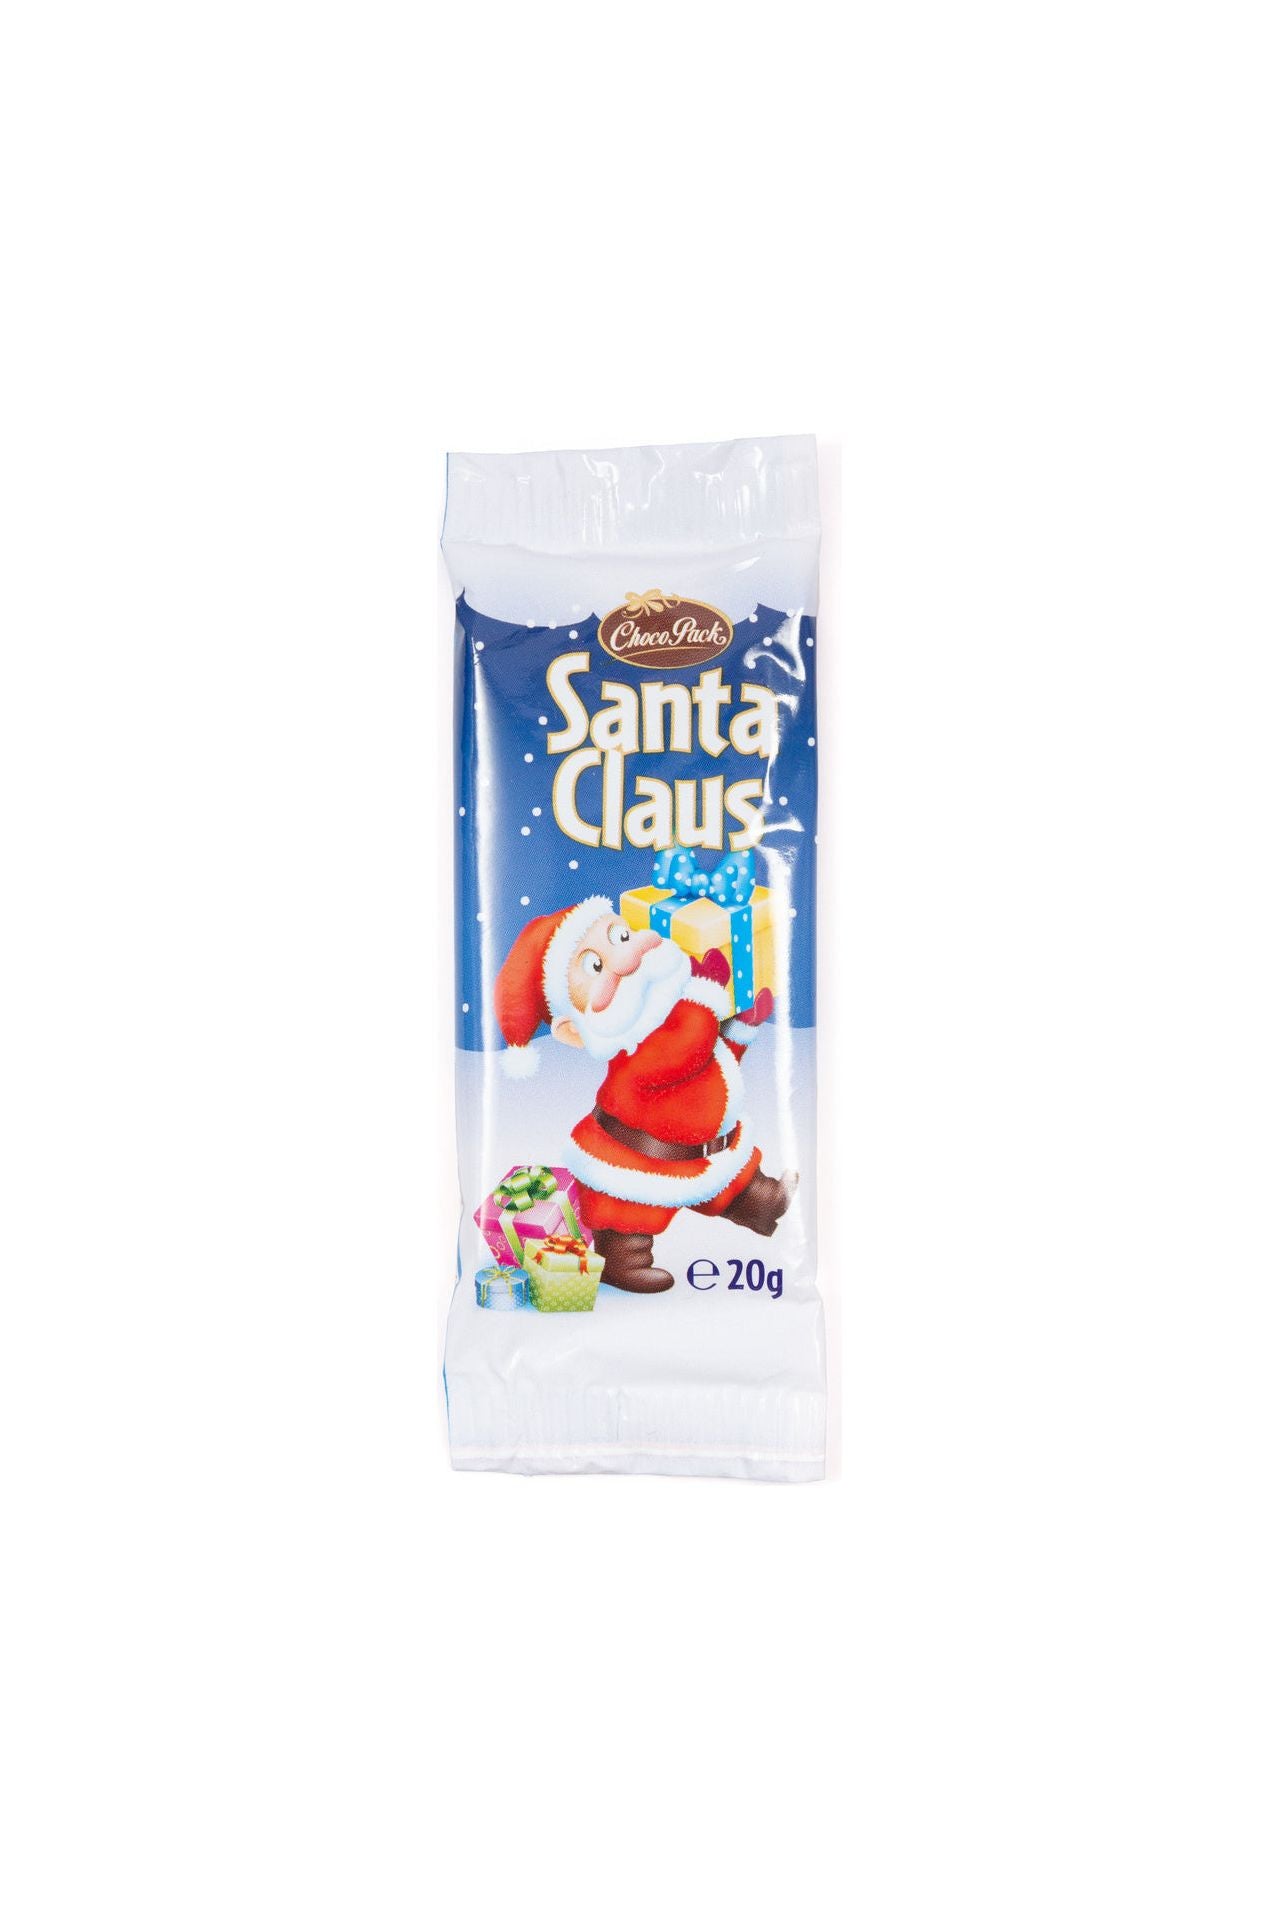 ChocoPack Chocolate Bar - Santa Claus